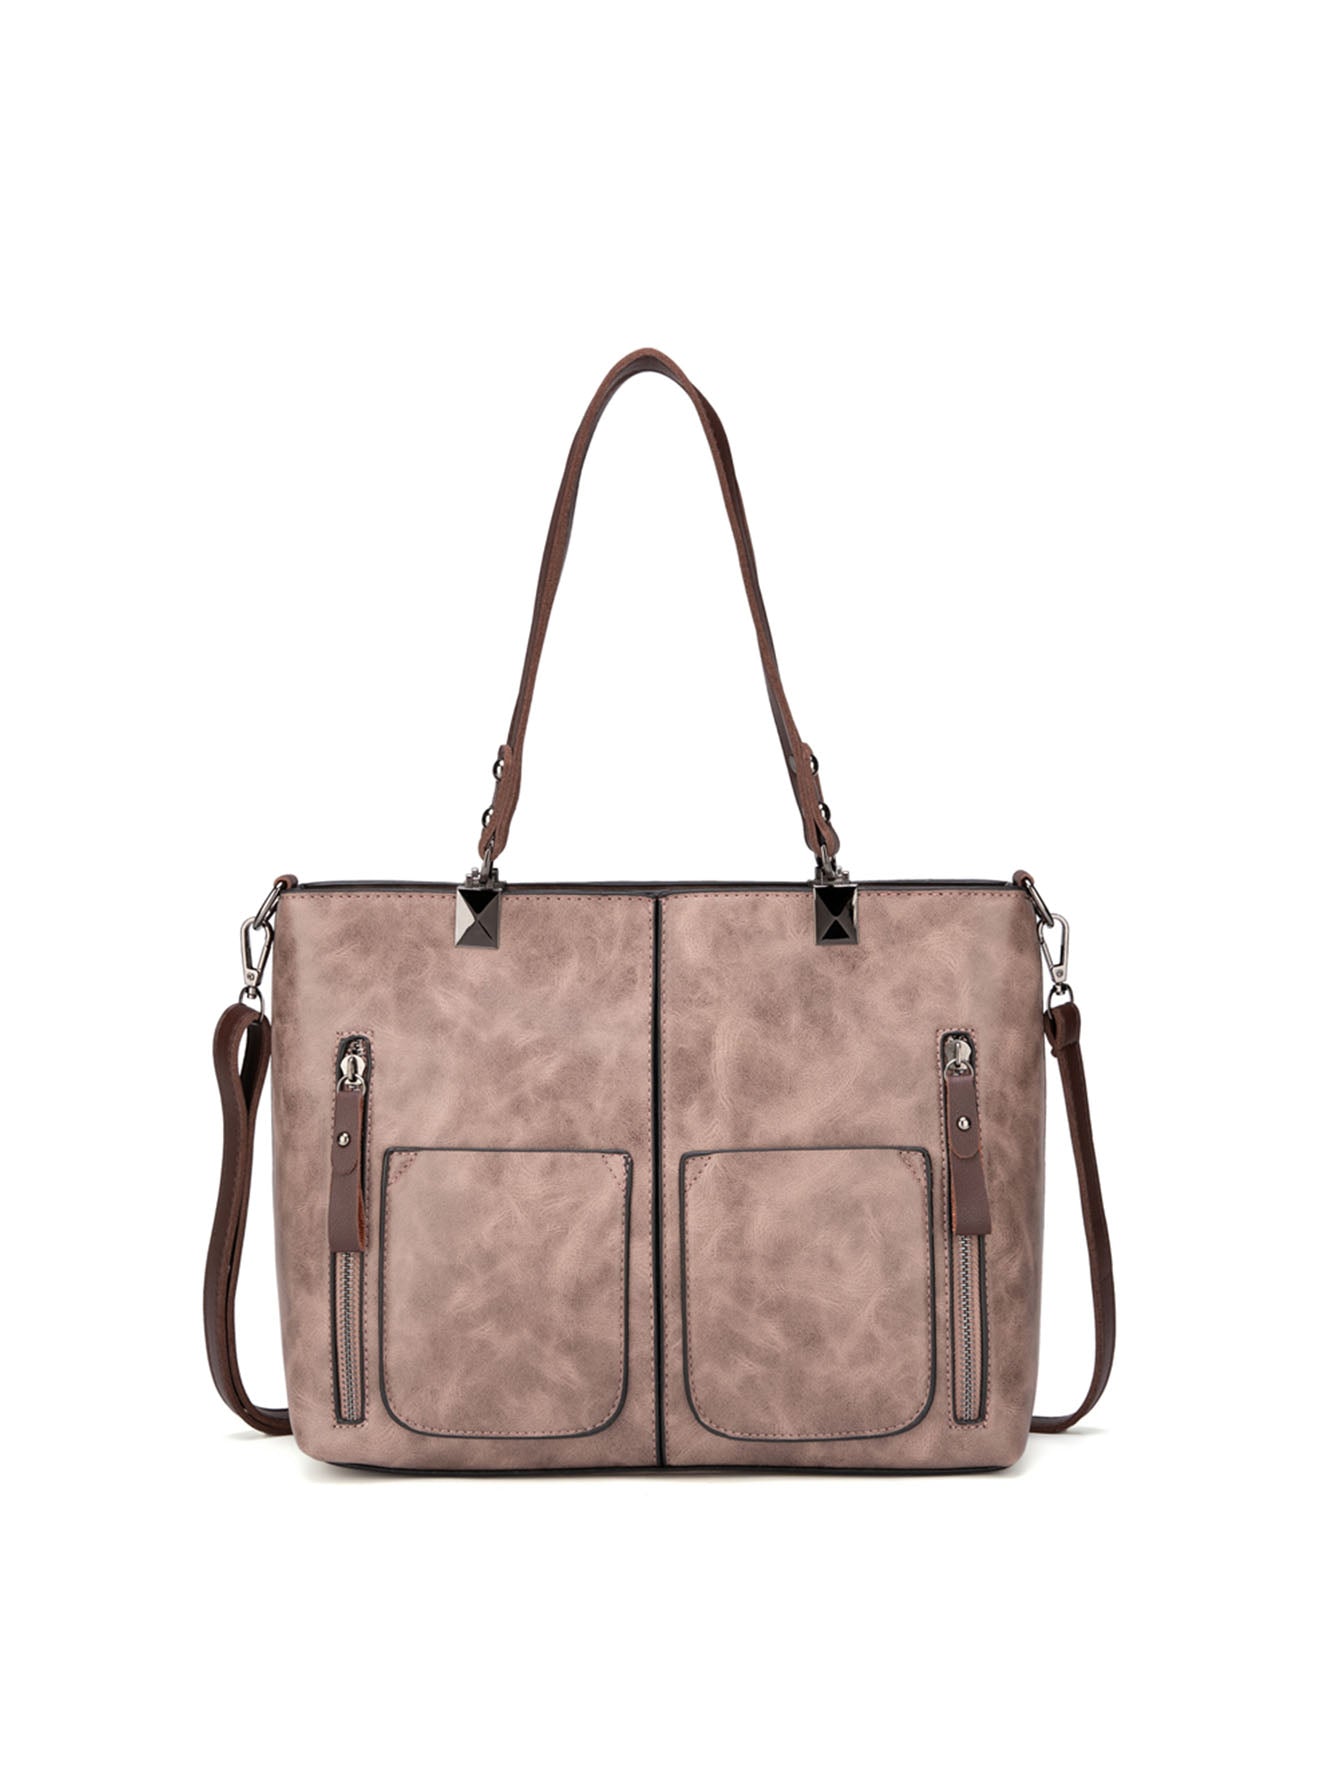 Women Top-handle Bags, Leather Tote Bags Vintage Shoulder Bag Satchel Purse and Handbags Sai Feel